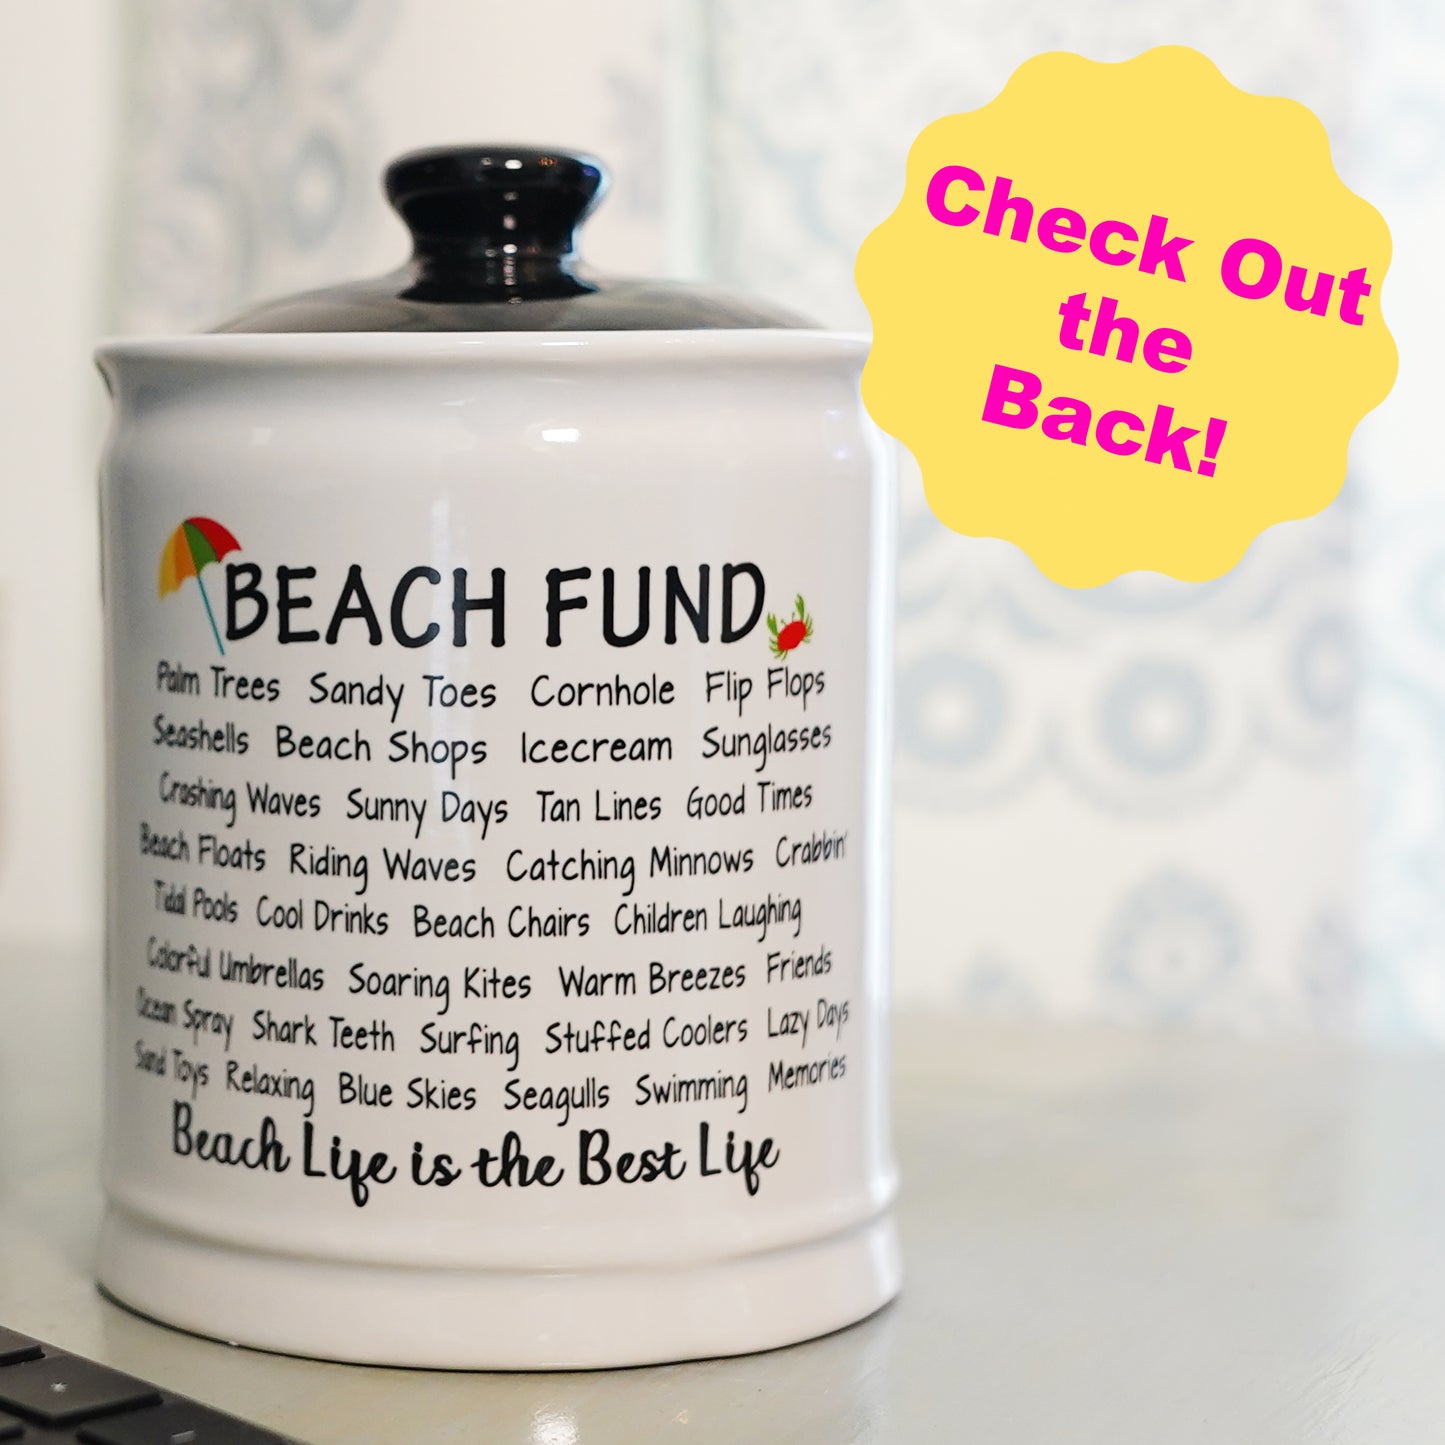 Cottage Creek Beach Fund Piggy Bank, Ceramic, 6", Multicolored Beach Vacation Bank